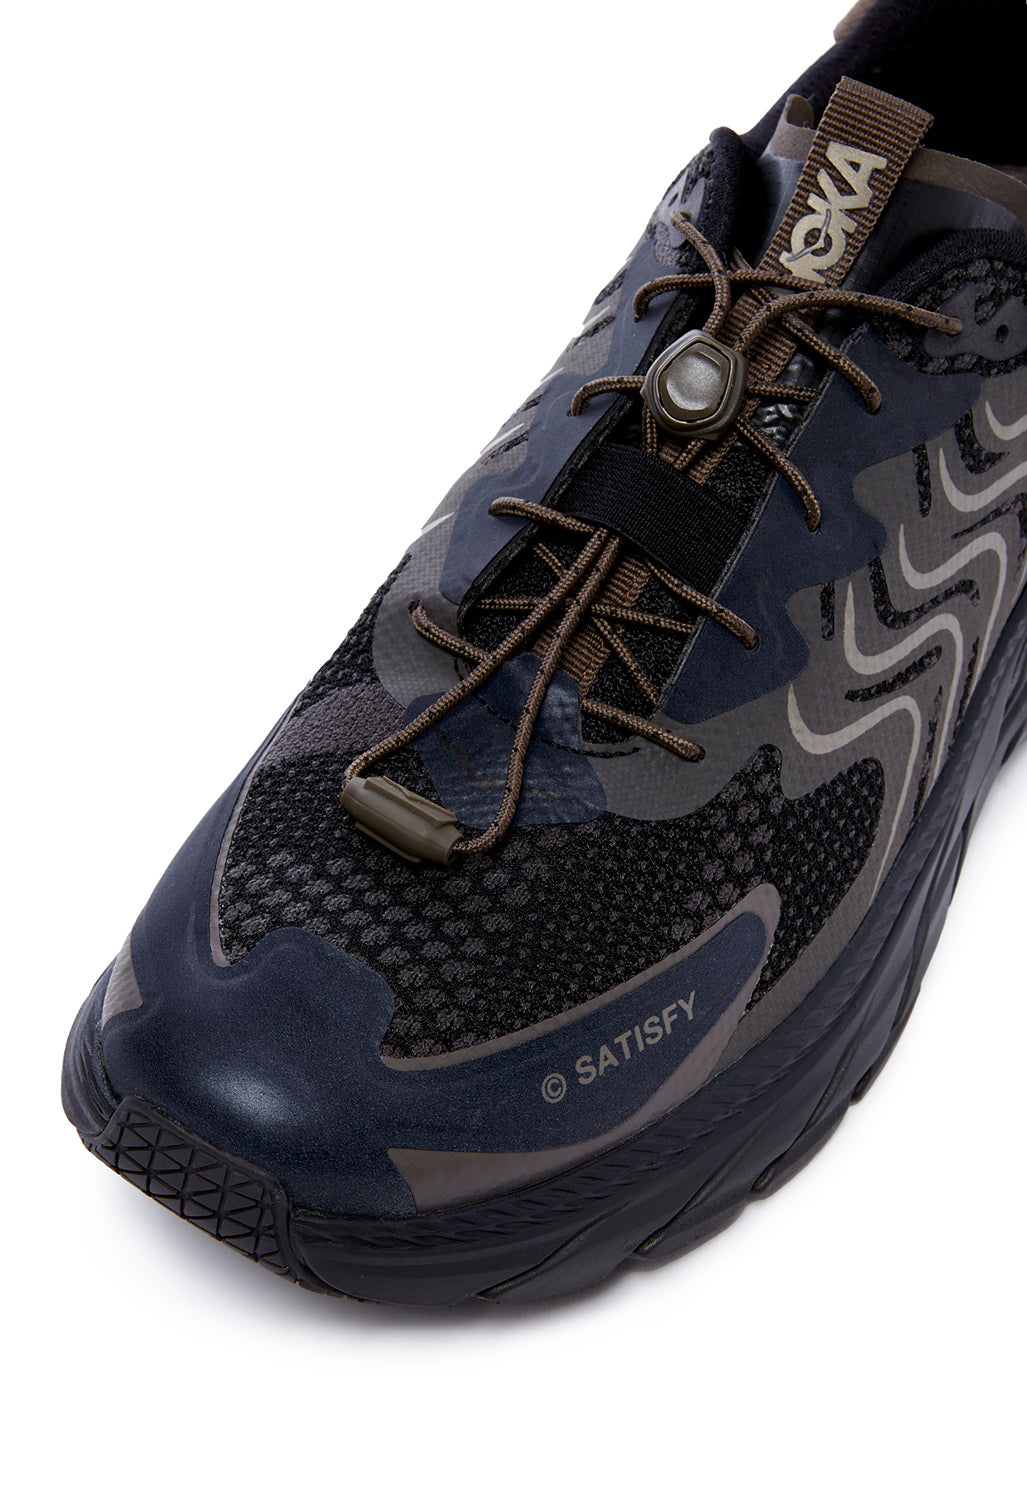 Hoka Clifton LS Satisfy Running Shoes - Forged Iron / Black